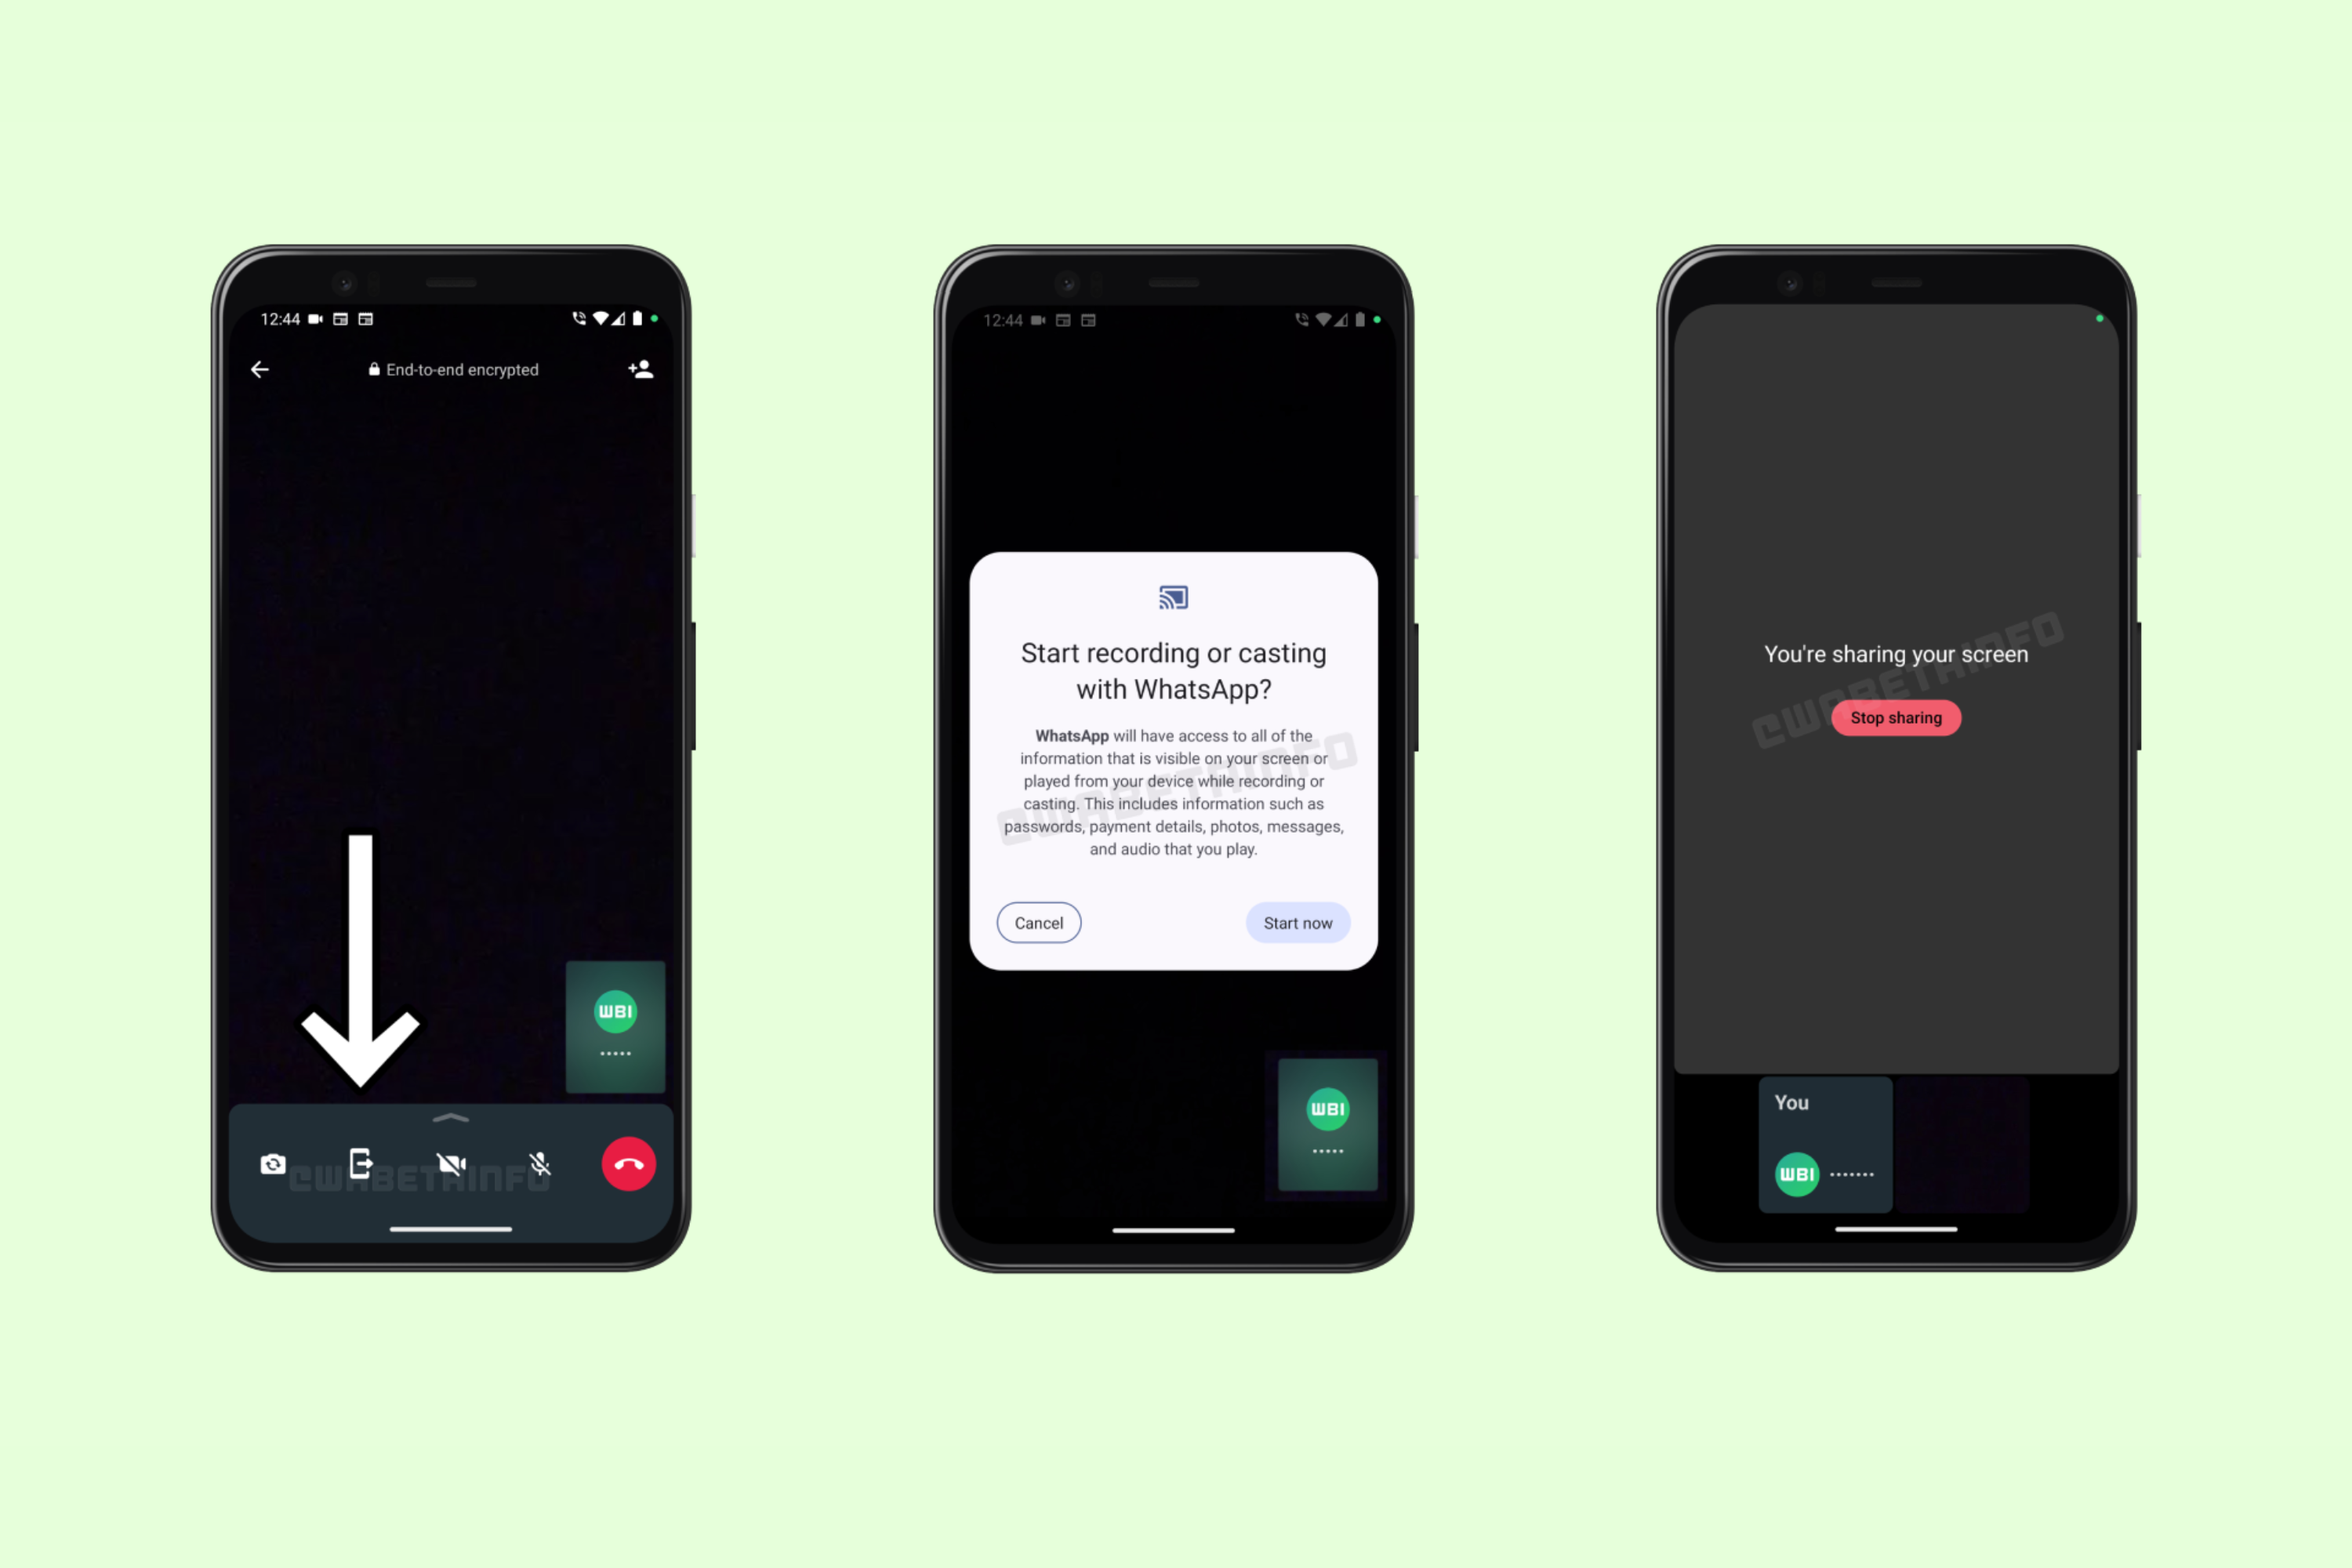 WhatsApp beta brings screen sharing and updated navigation bar to Android